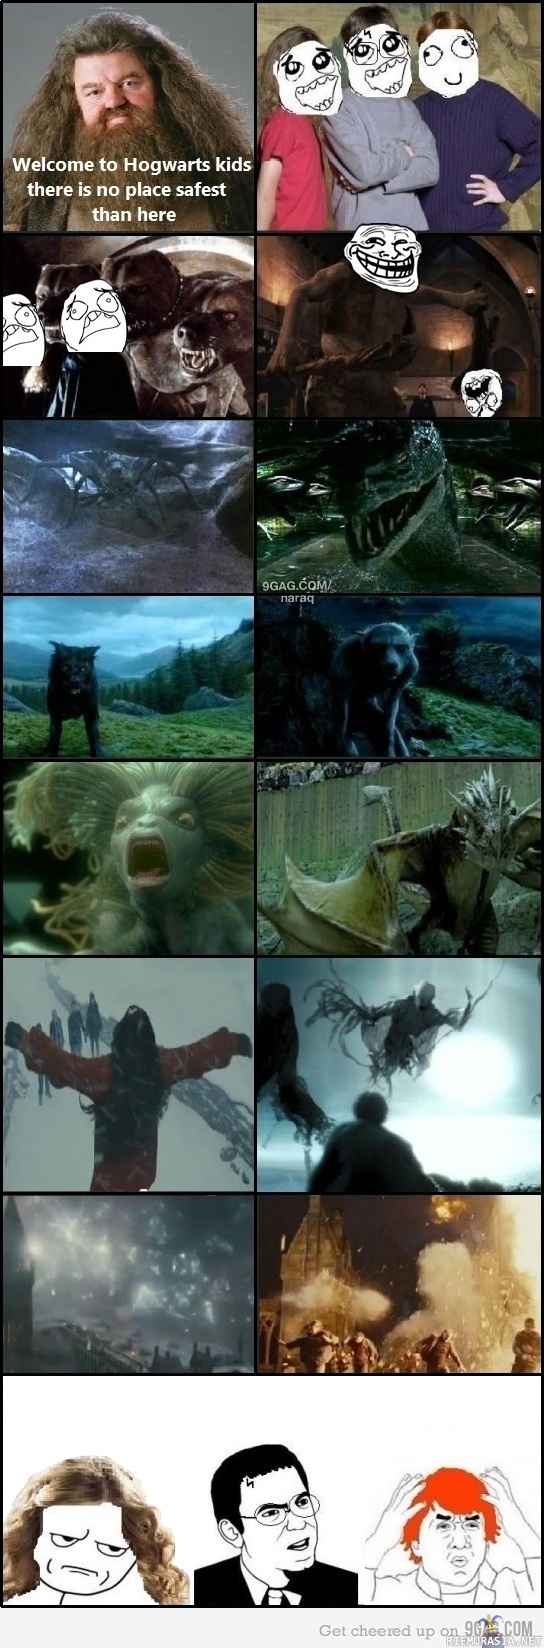 Hogwarts is the safest - Hagrid be trolling